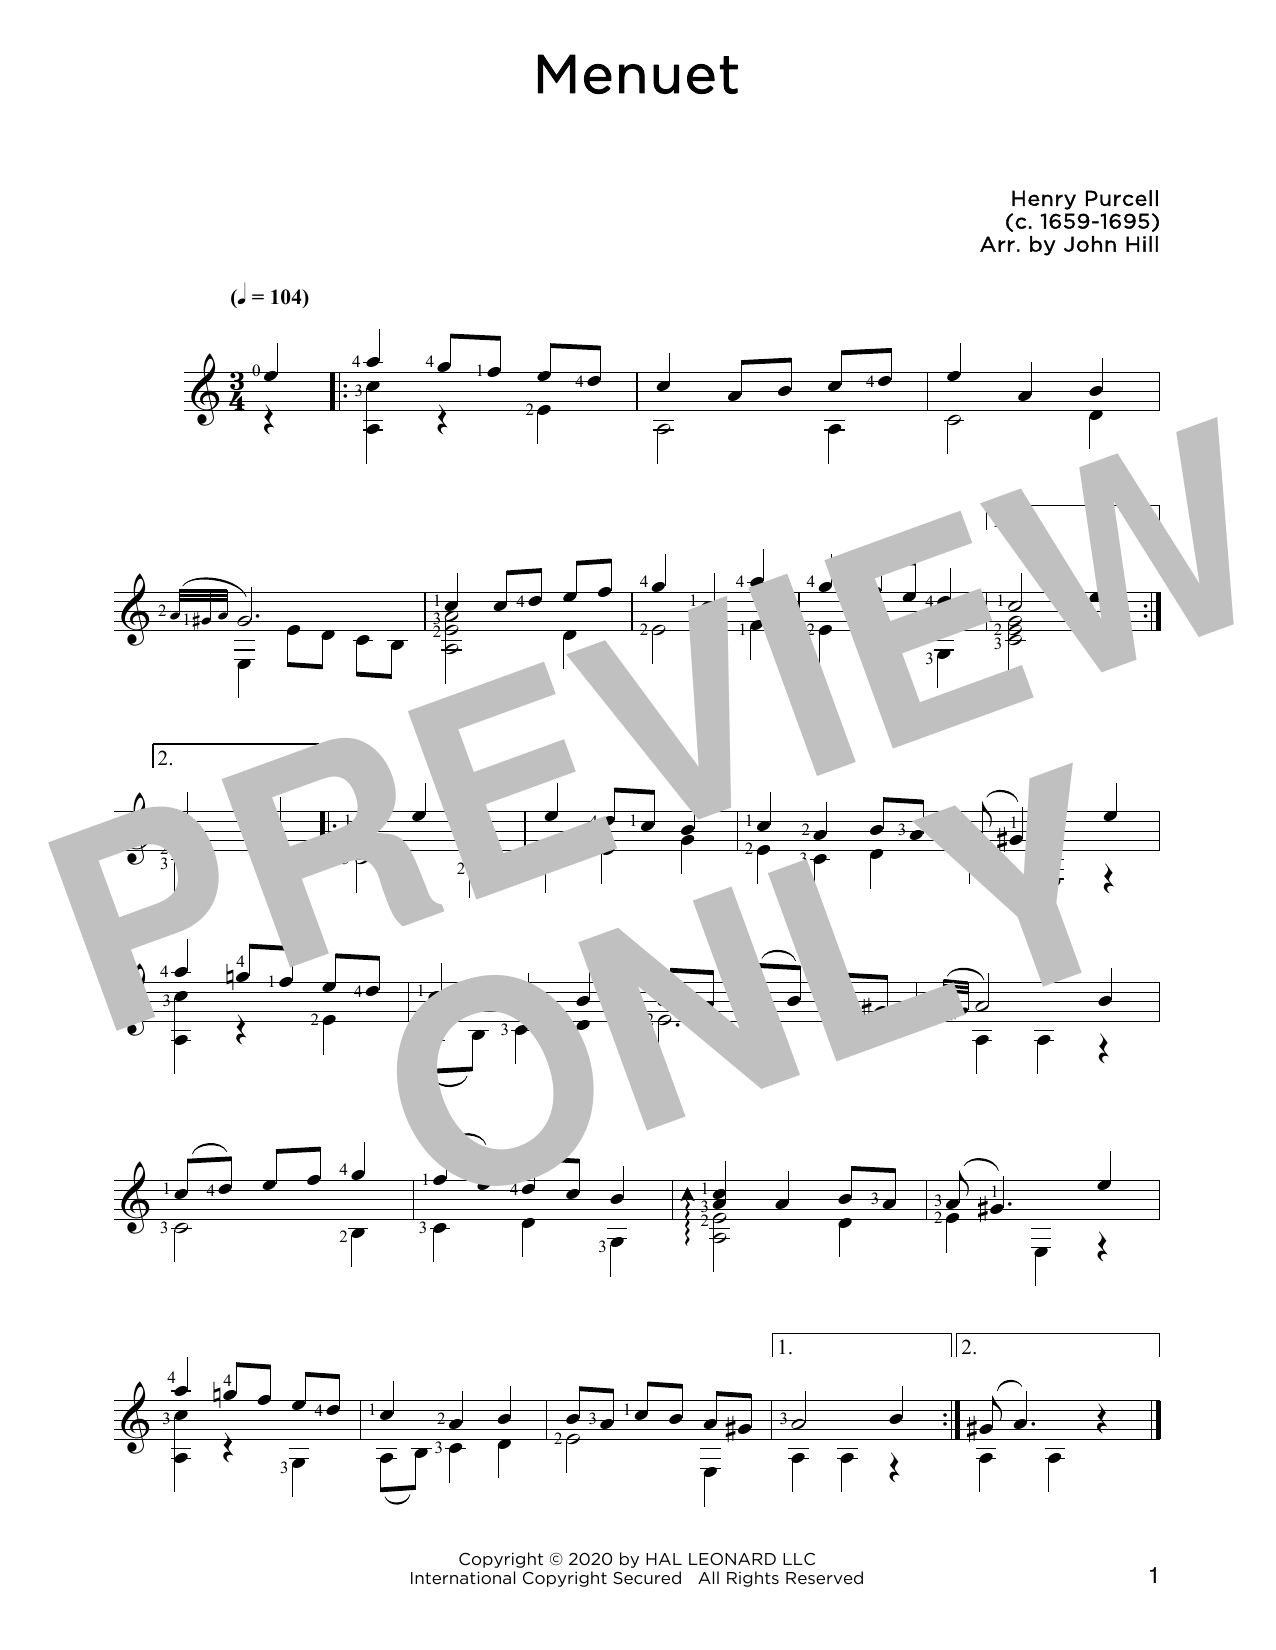 Download Henry Purcell Menuet Sheet Music